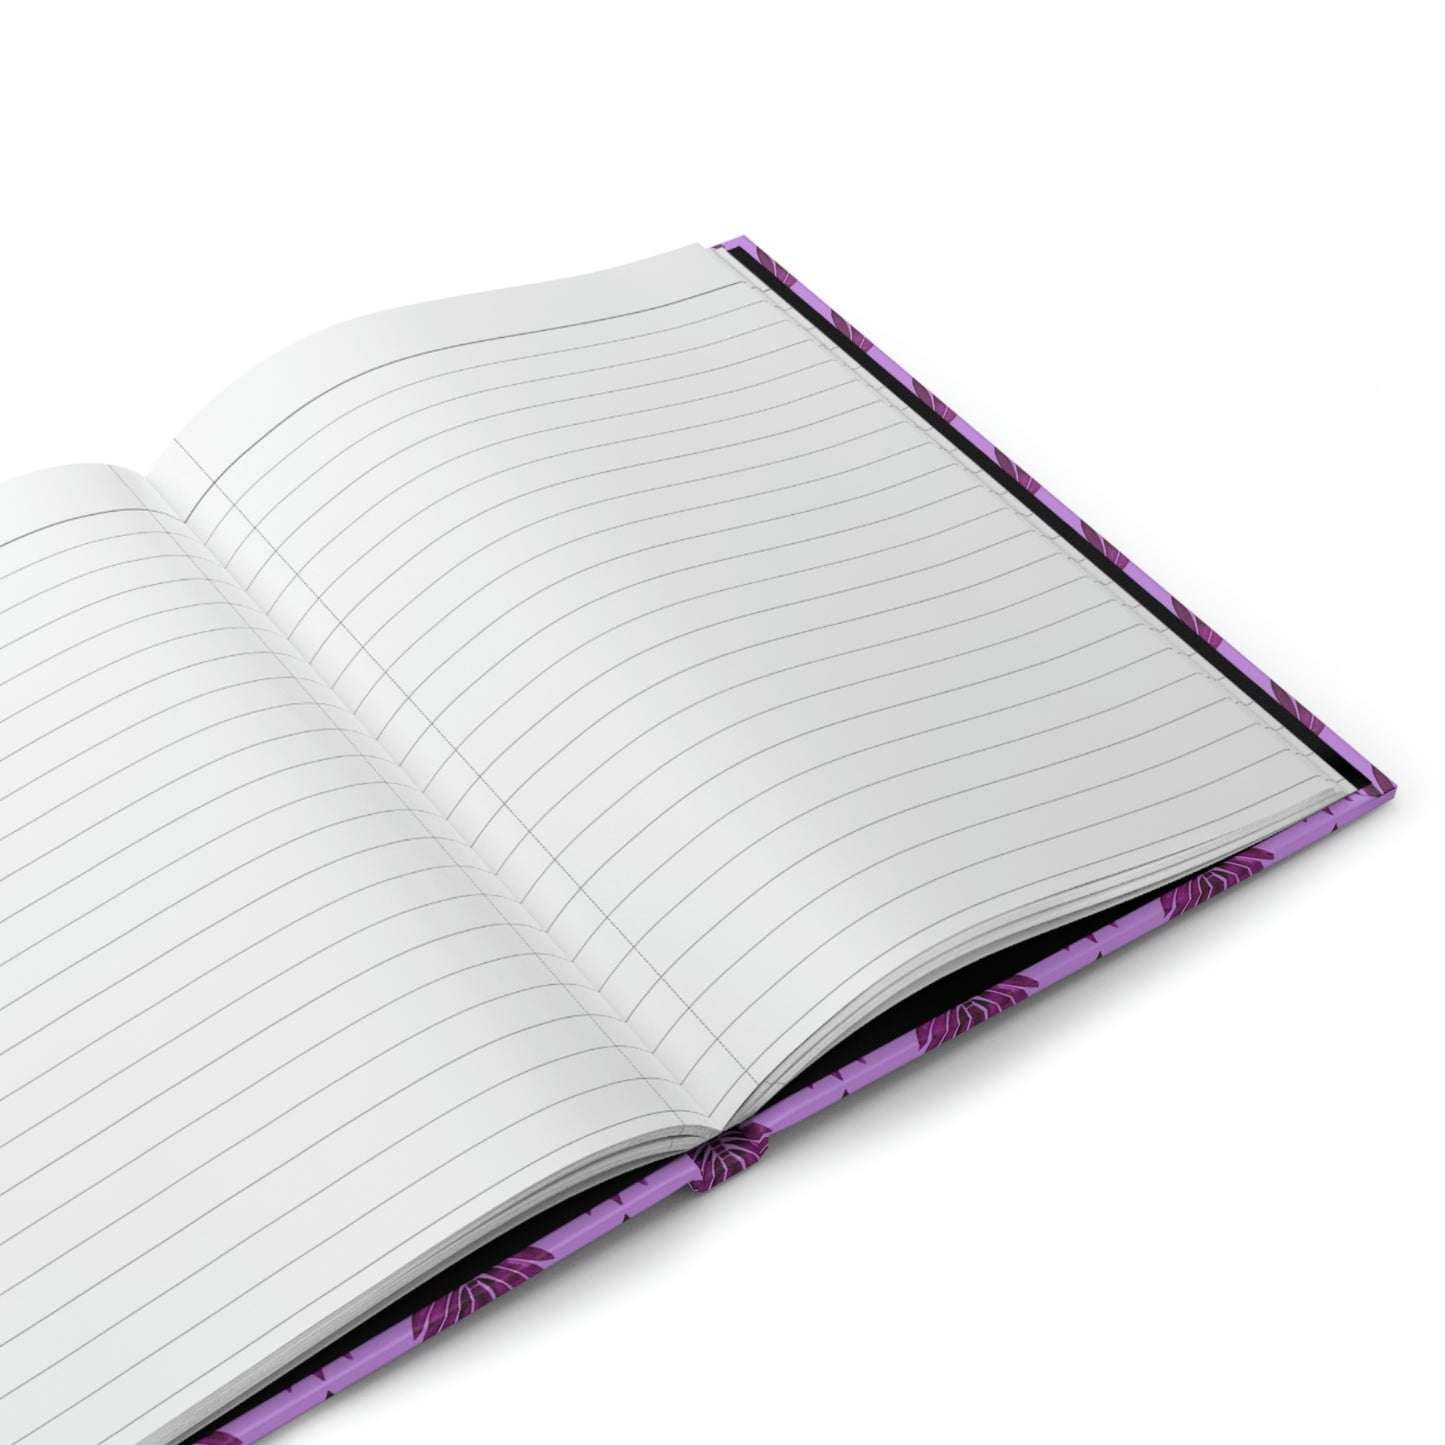 Yoga Journal - Violet Pink Flower Feather Hardcover Journal Matte